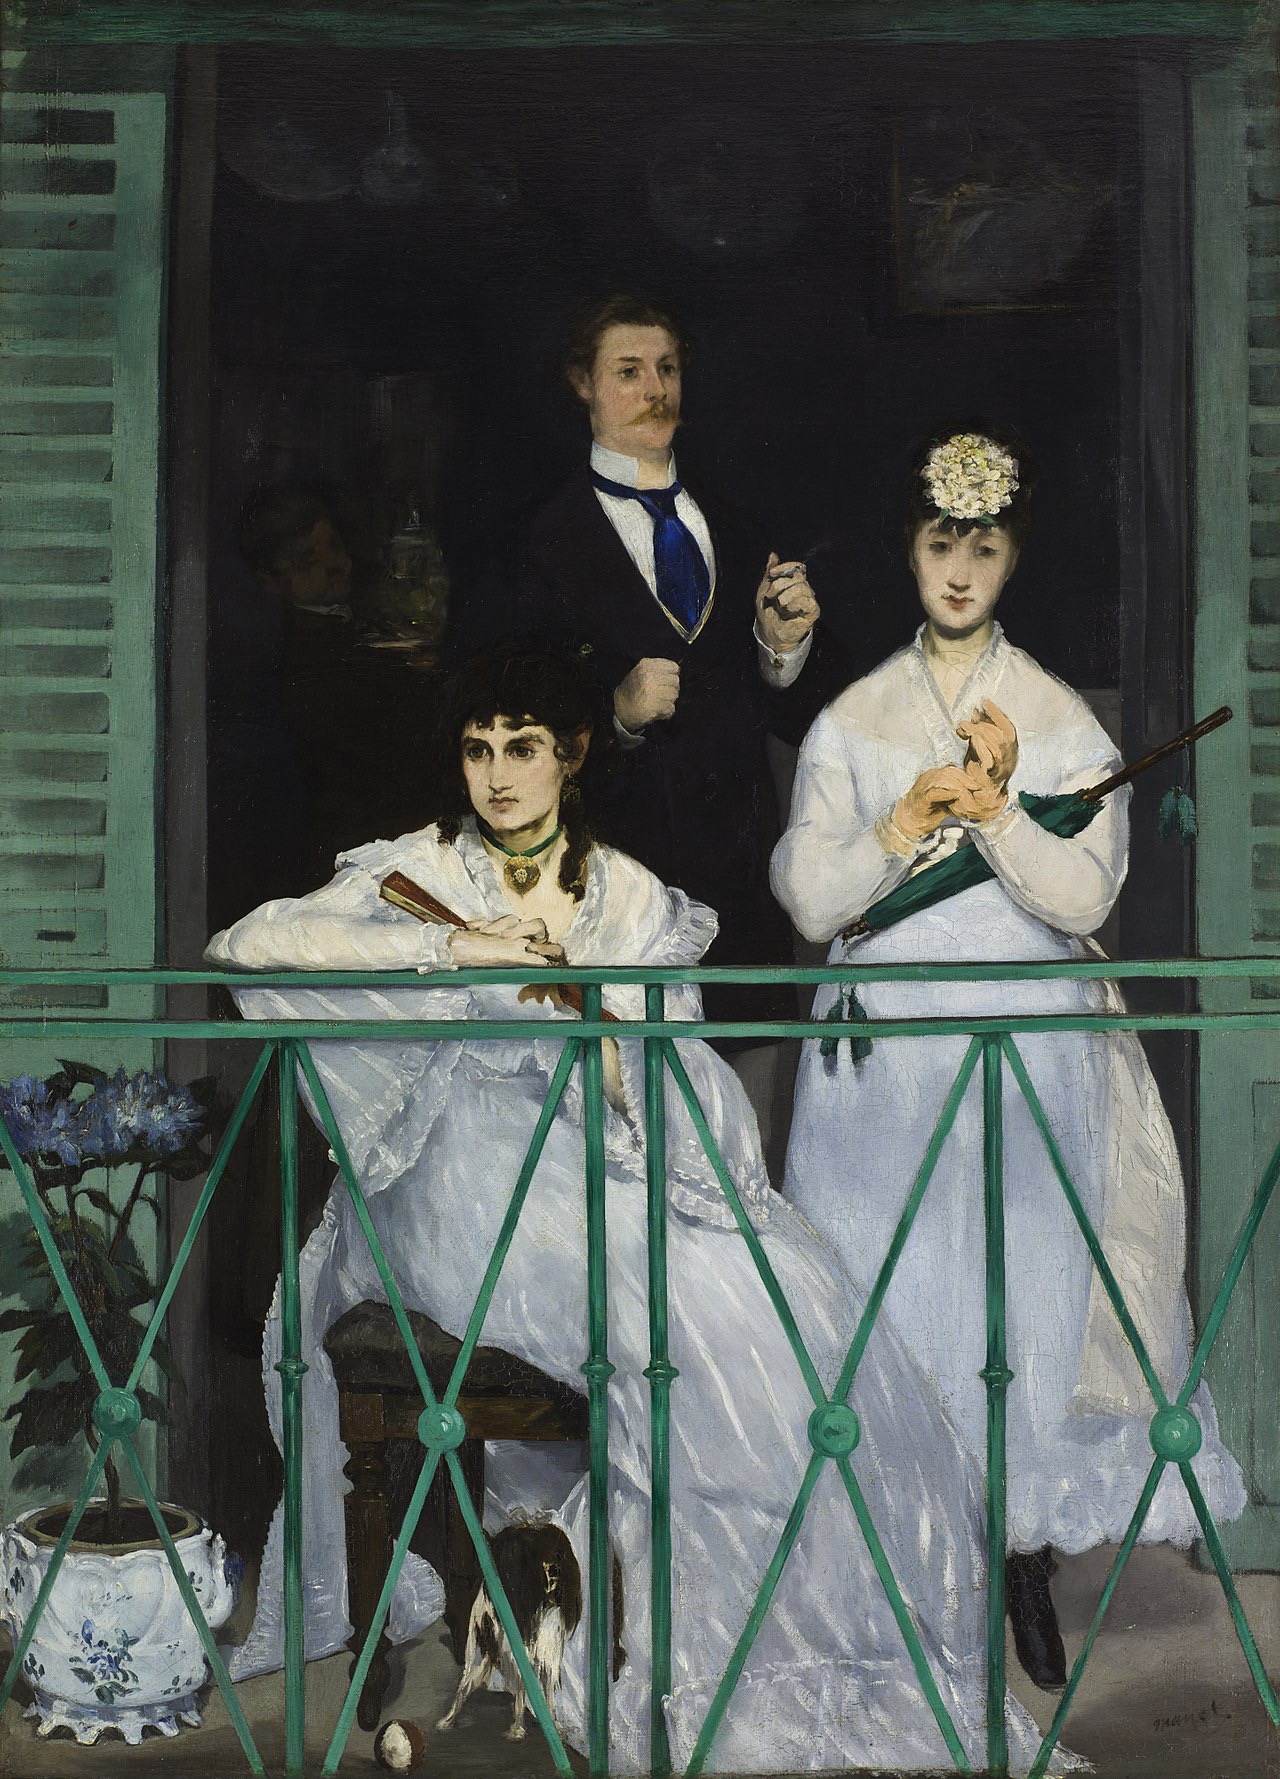 The original The Balcony by Edouard Manet